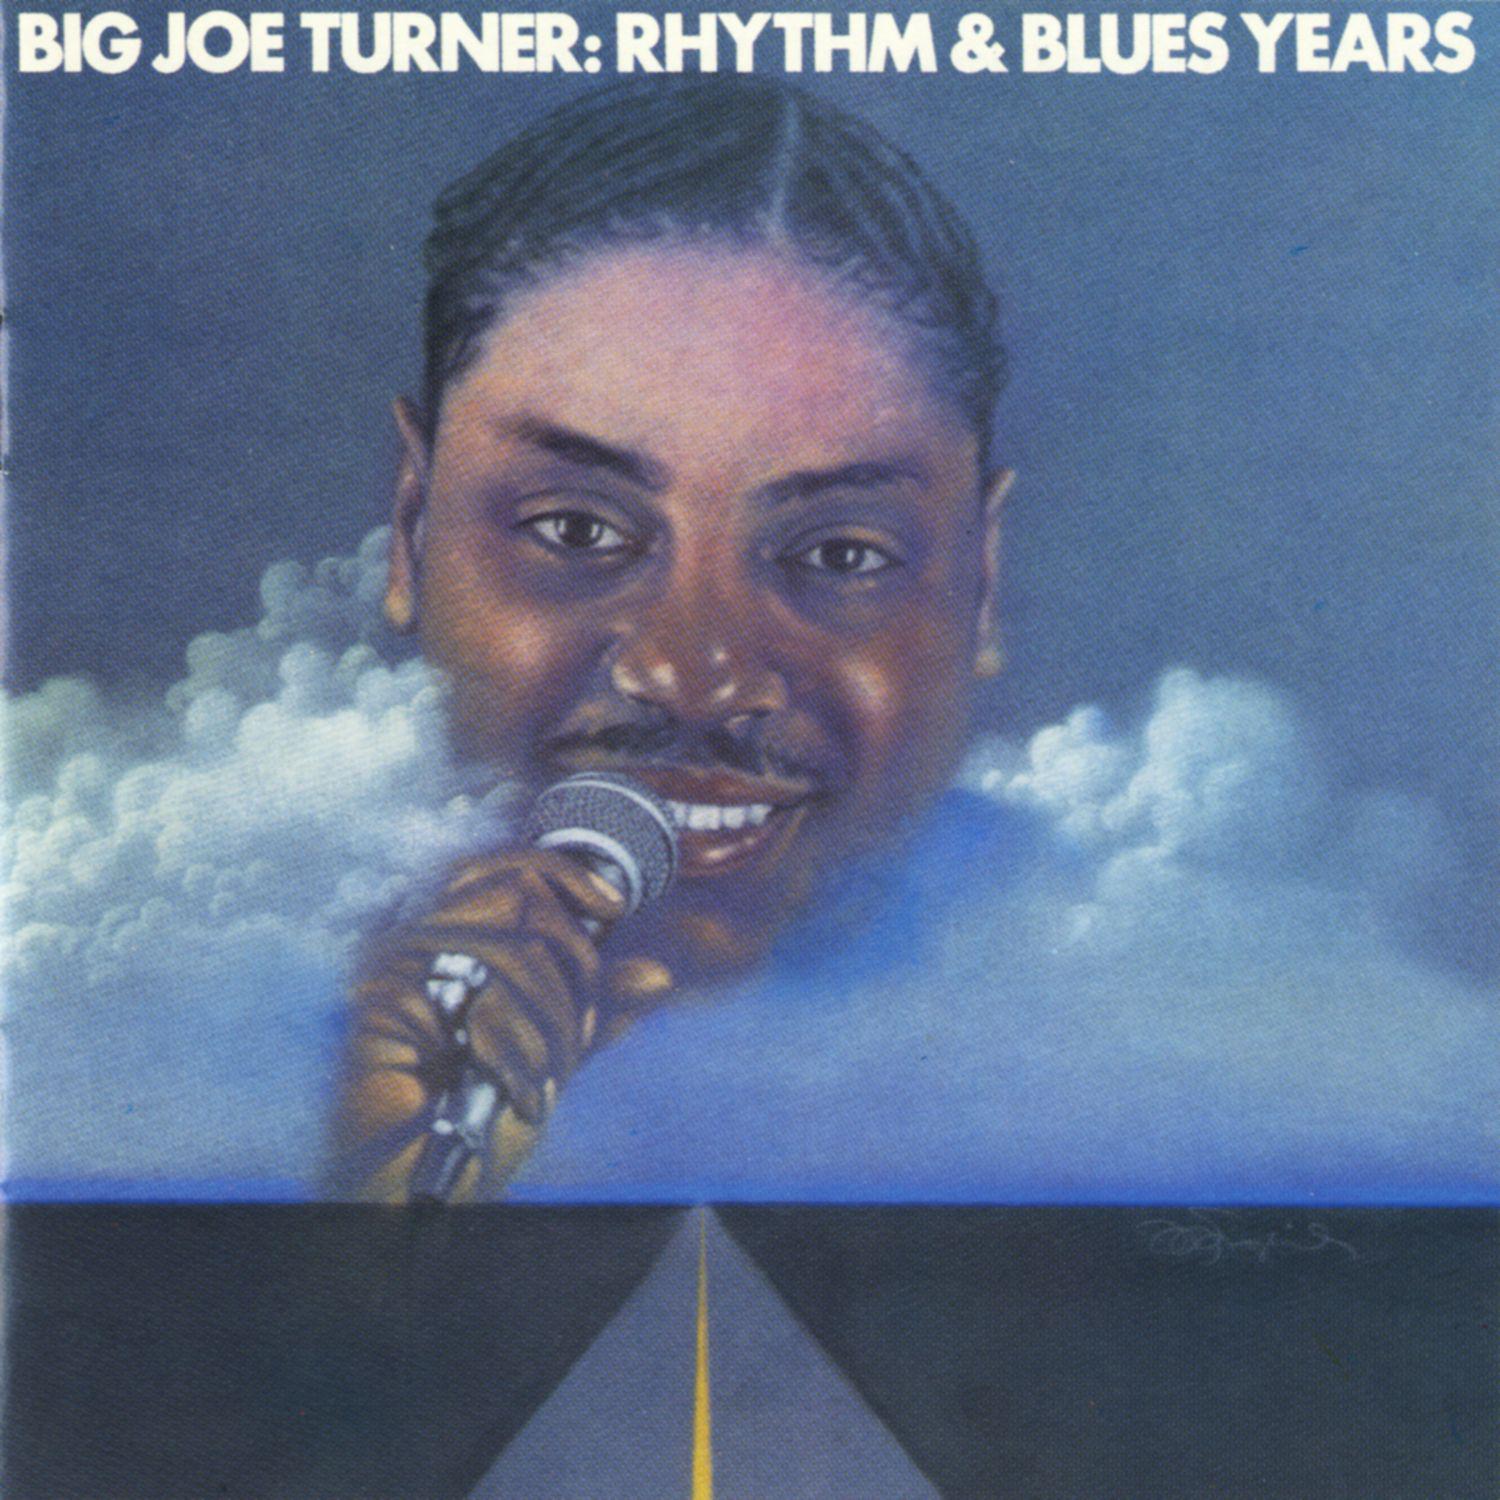 Big Joe Turner: The Rhythm & Blues Years